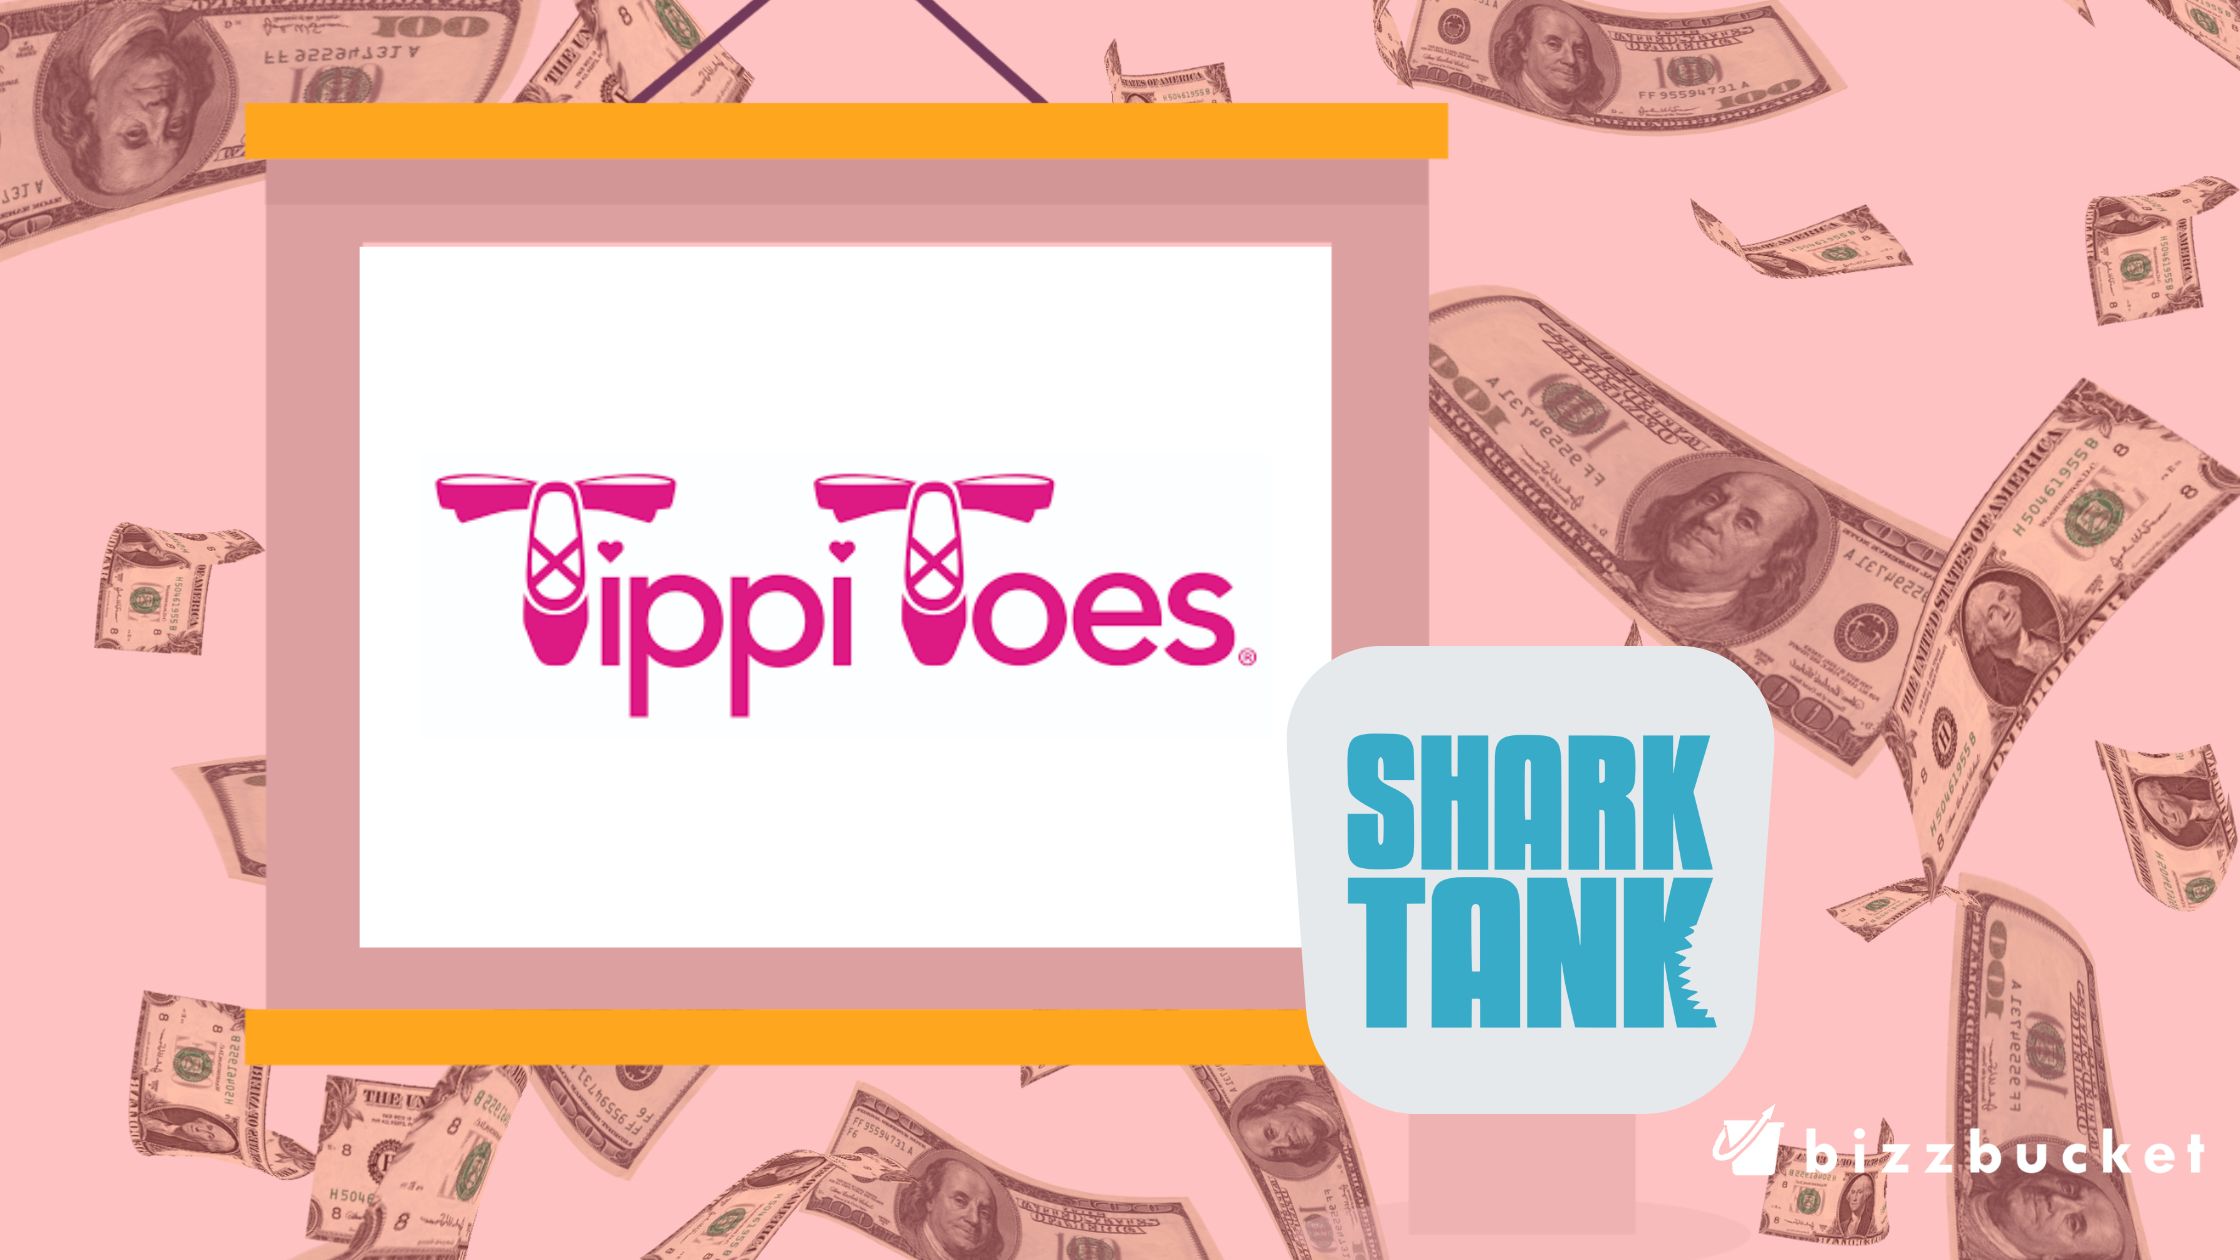 Tippi toes shark tank update